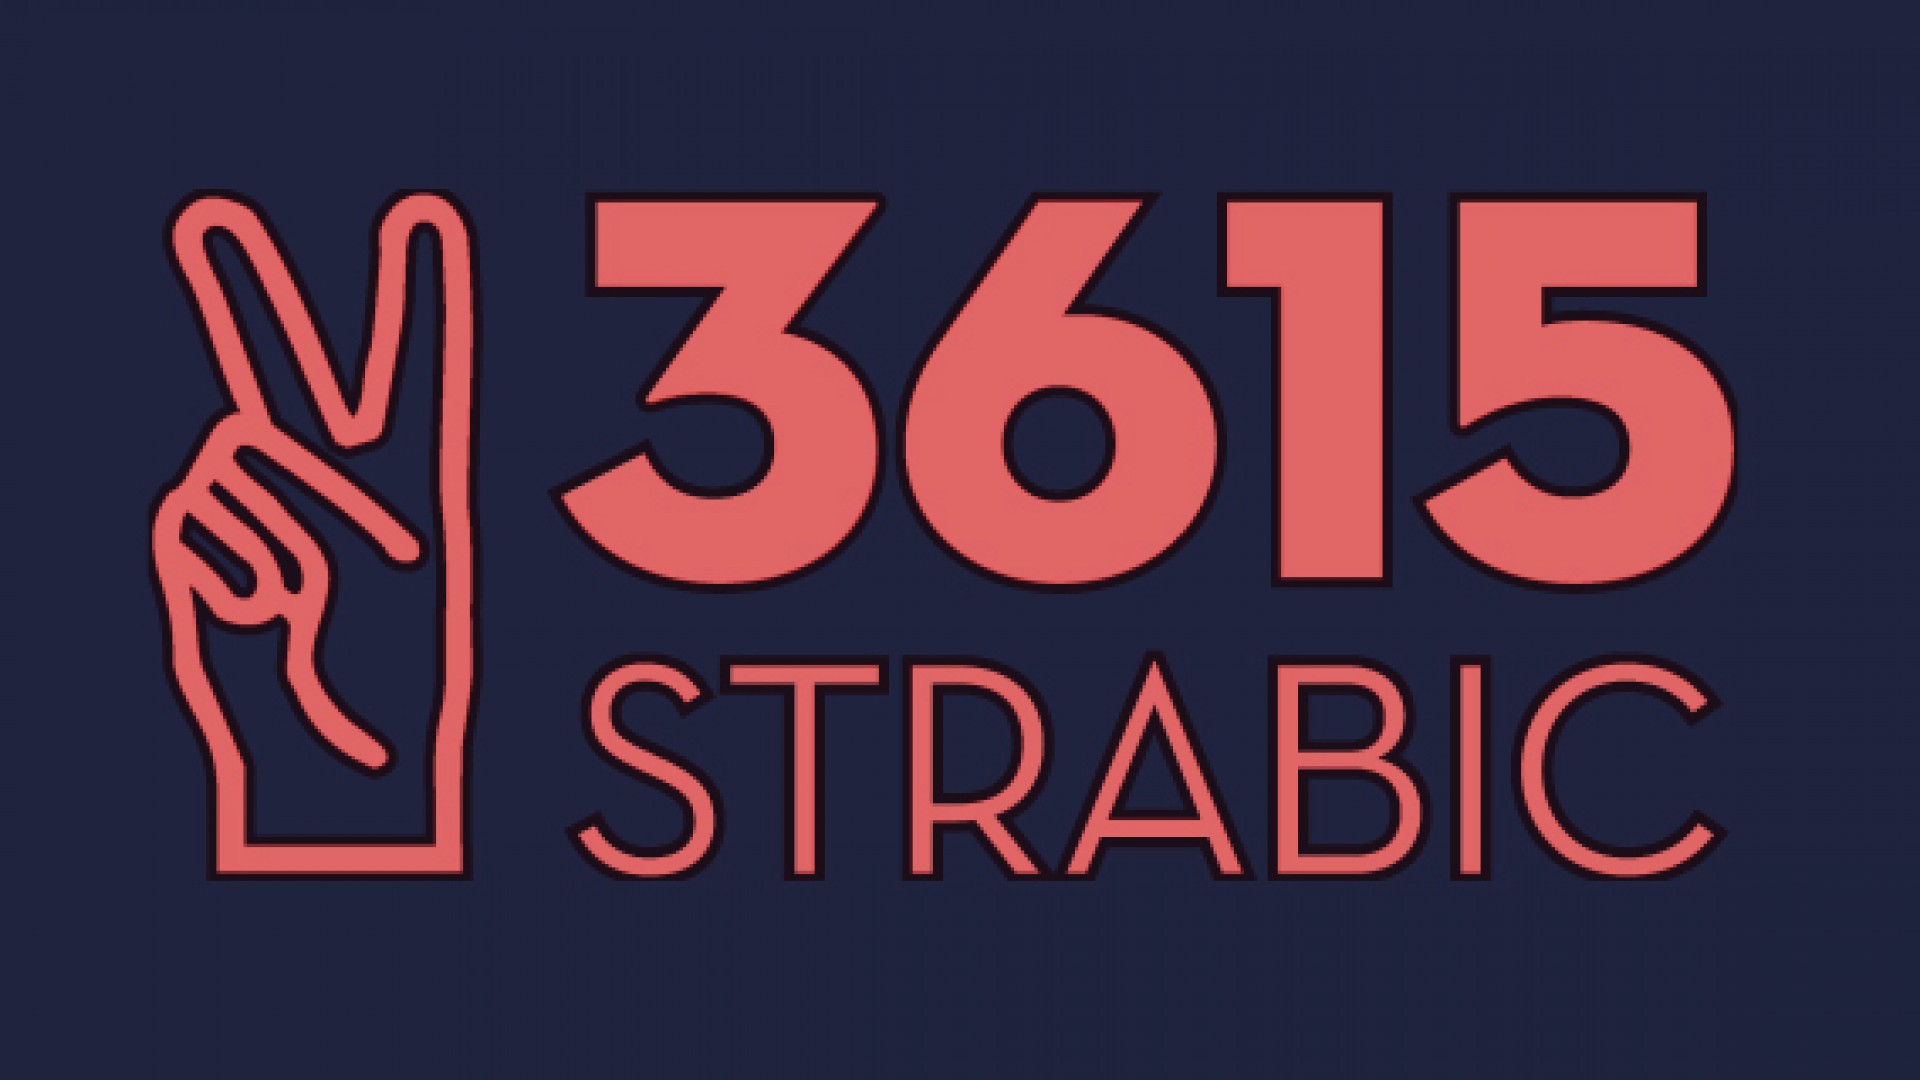 3615 Strabic